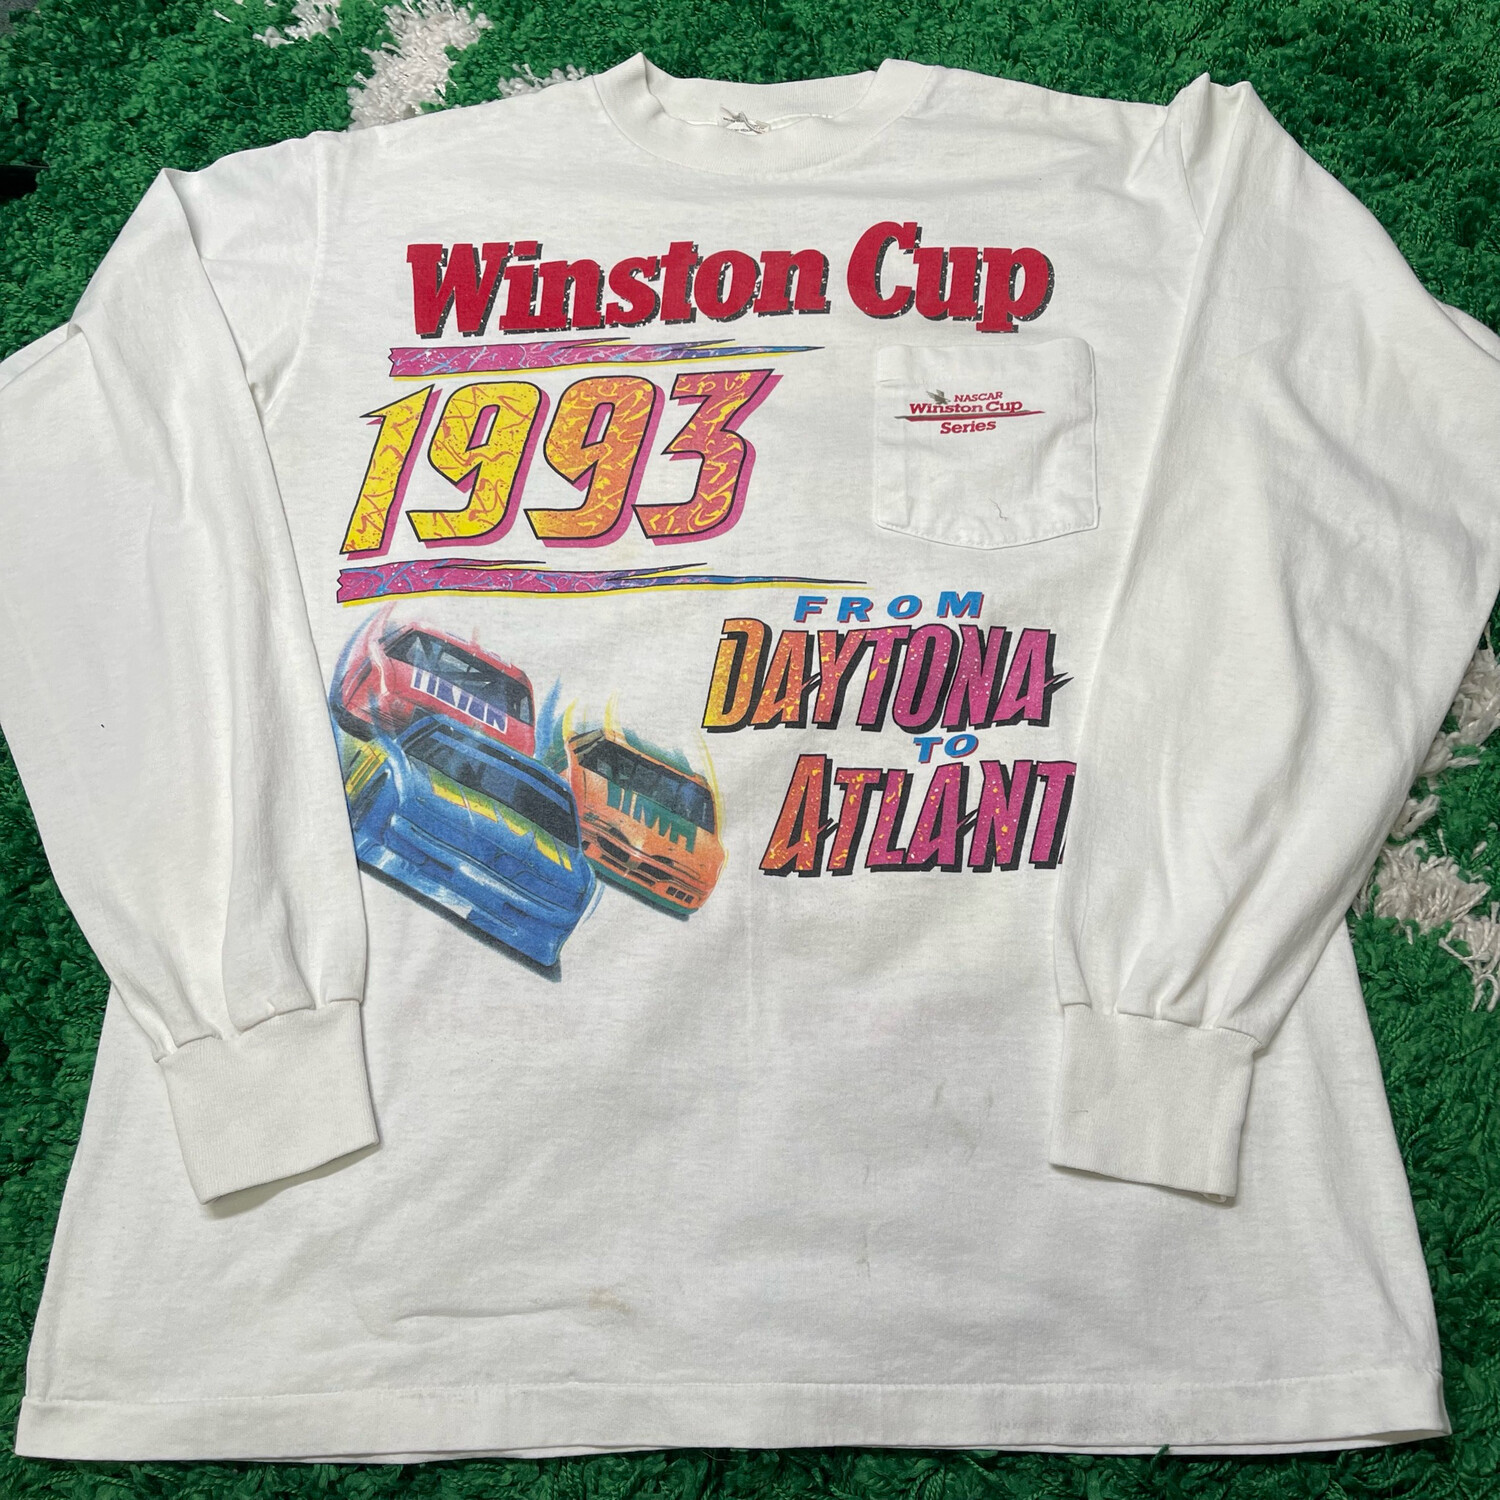 Winston Cup 1993 Daytona Long Sleeve Size XL